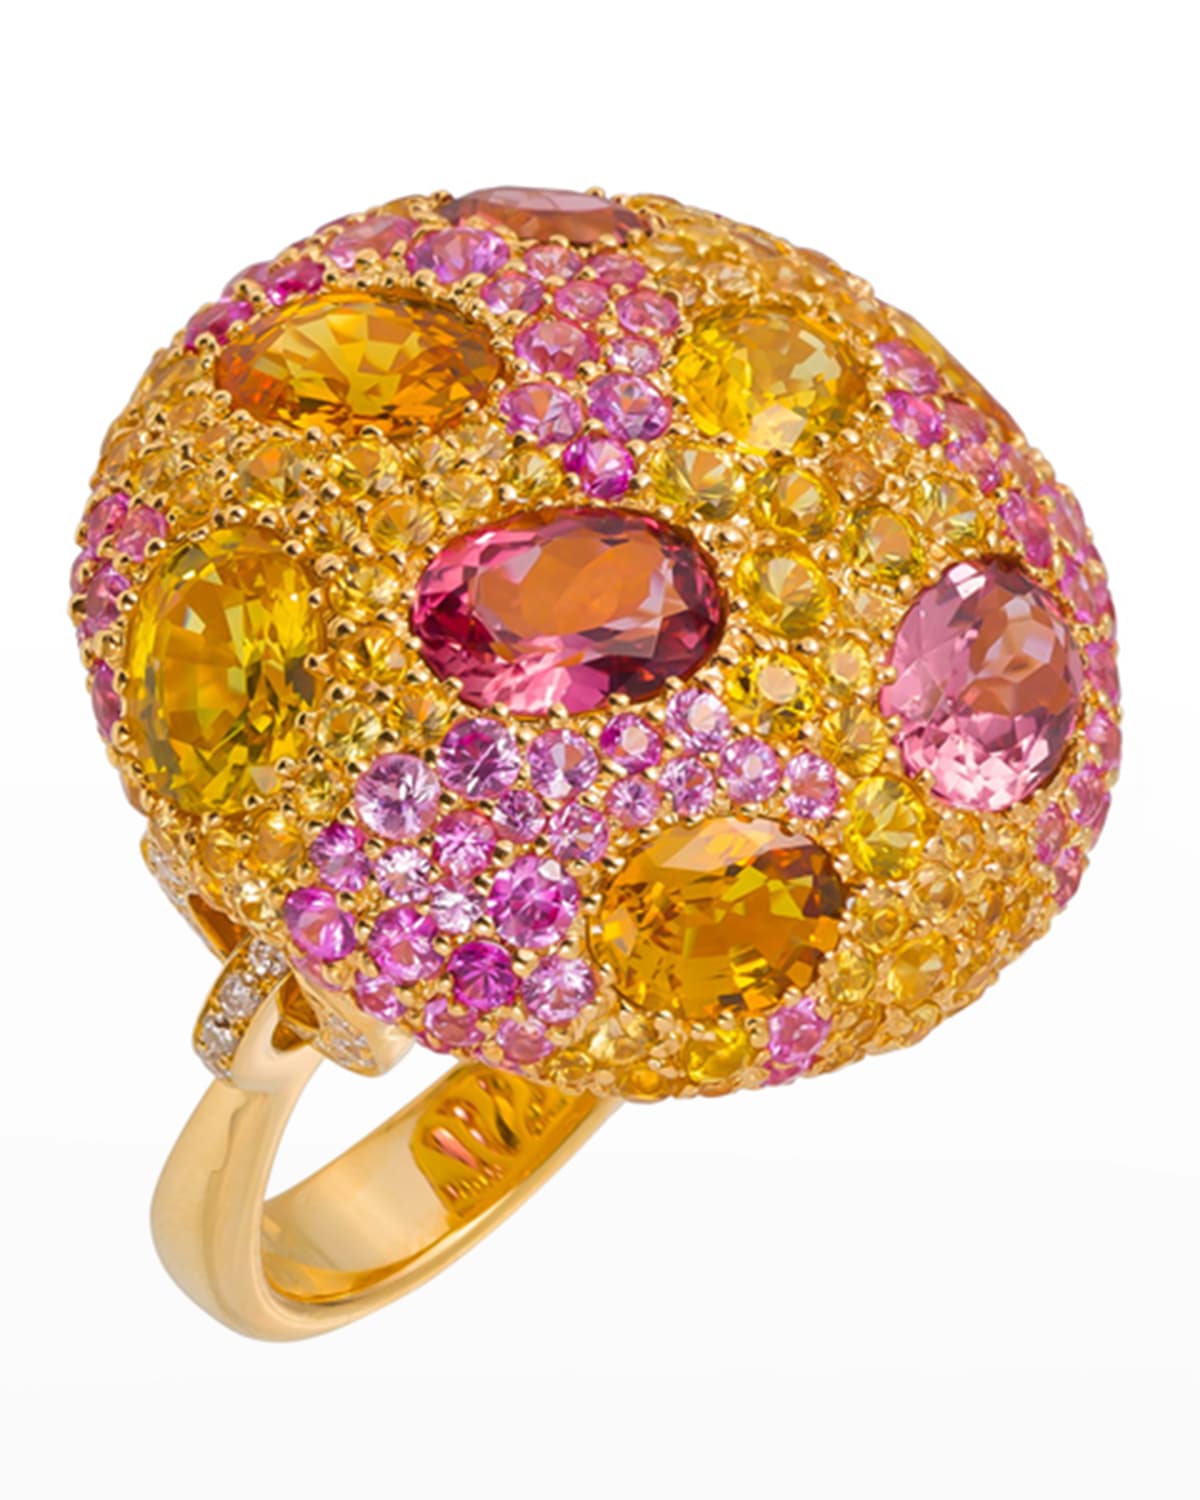 Margot McKinney Jewelry 18k Gold & Stone Cookie Ring, Size 6.5